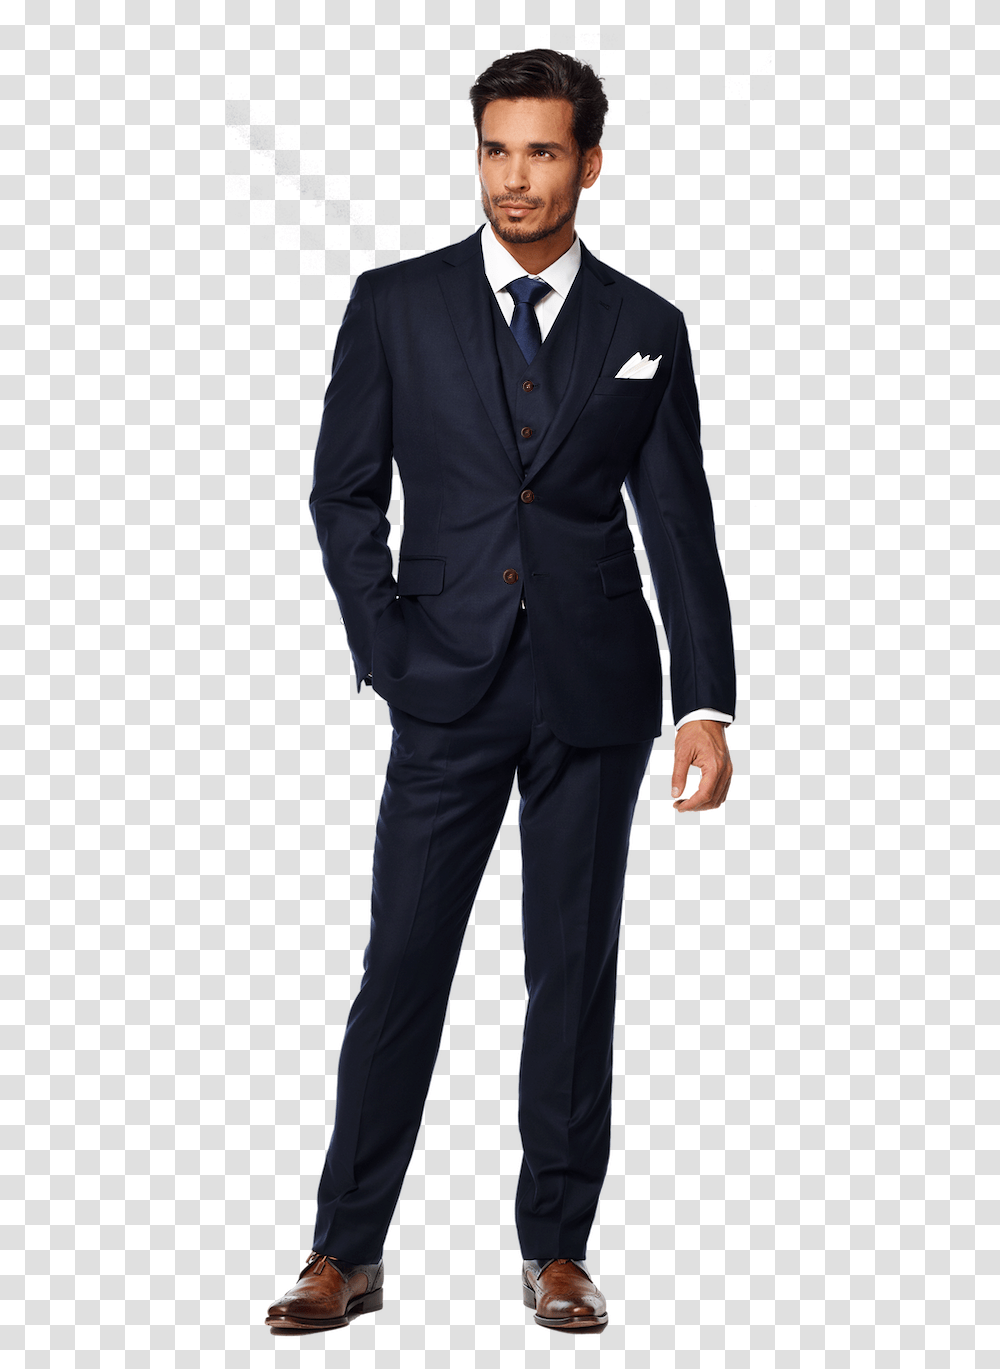 Black Man In Suit 3 Piece Suit With Tie, Overcoat, Tuxedo, Person Transparent Png